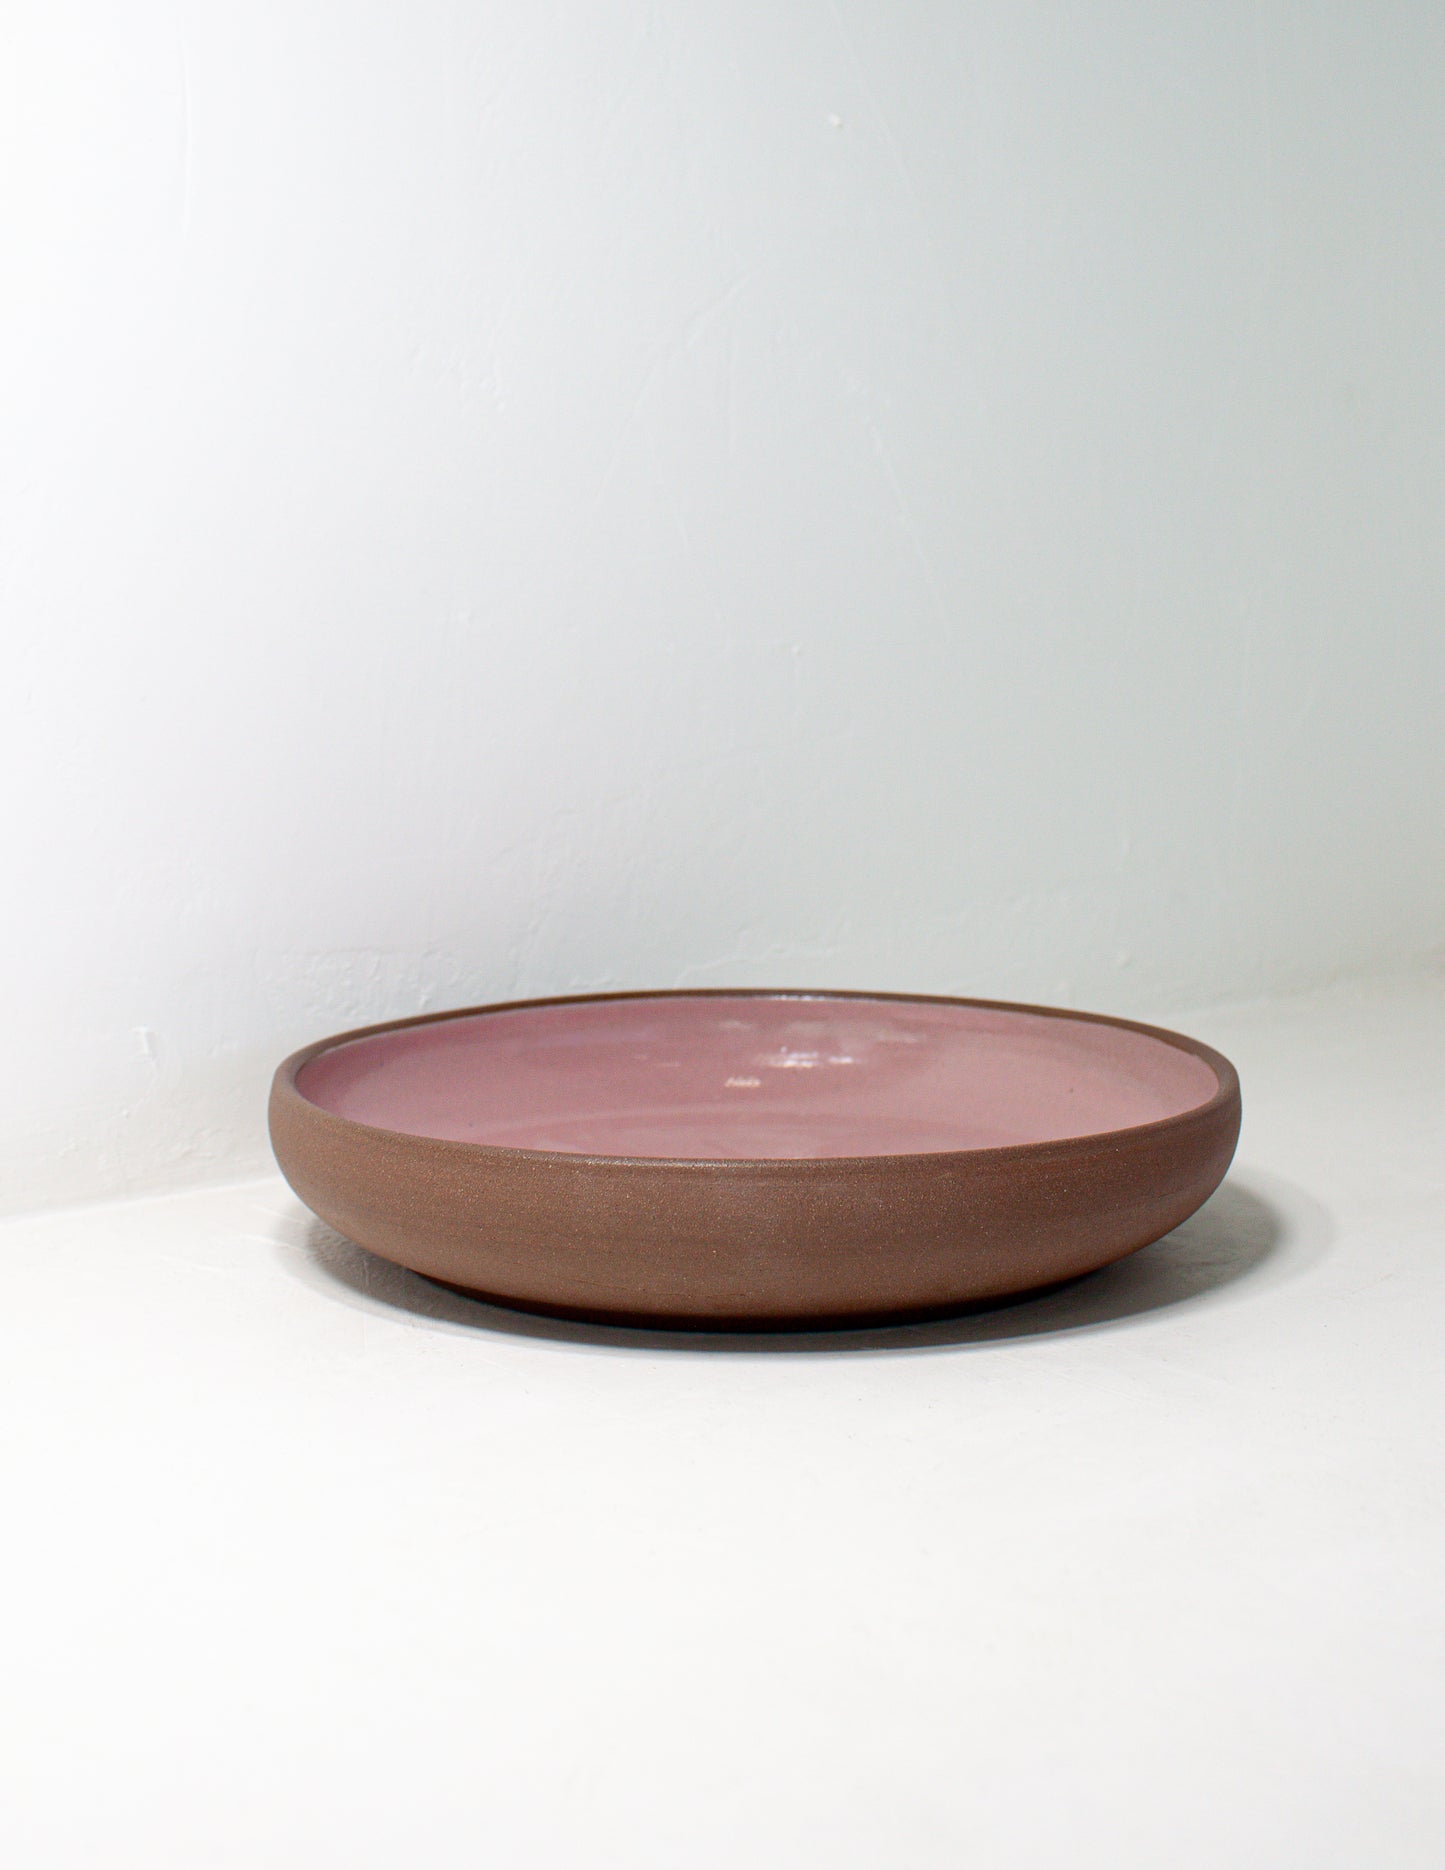 handmade ceramic serving bowl glazed in pink